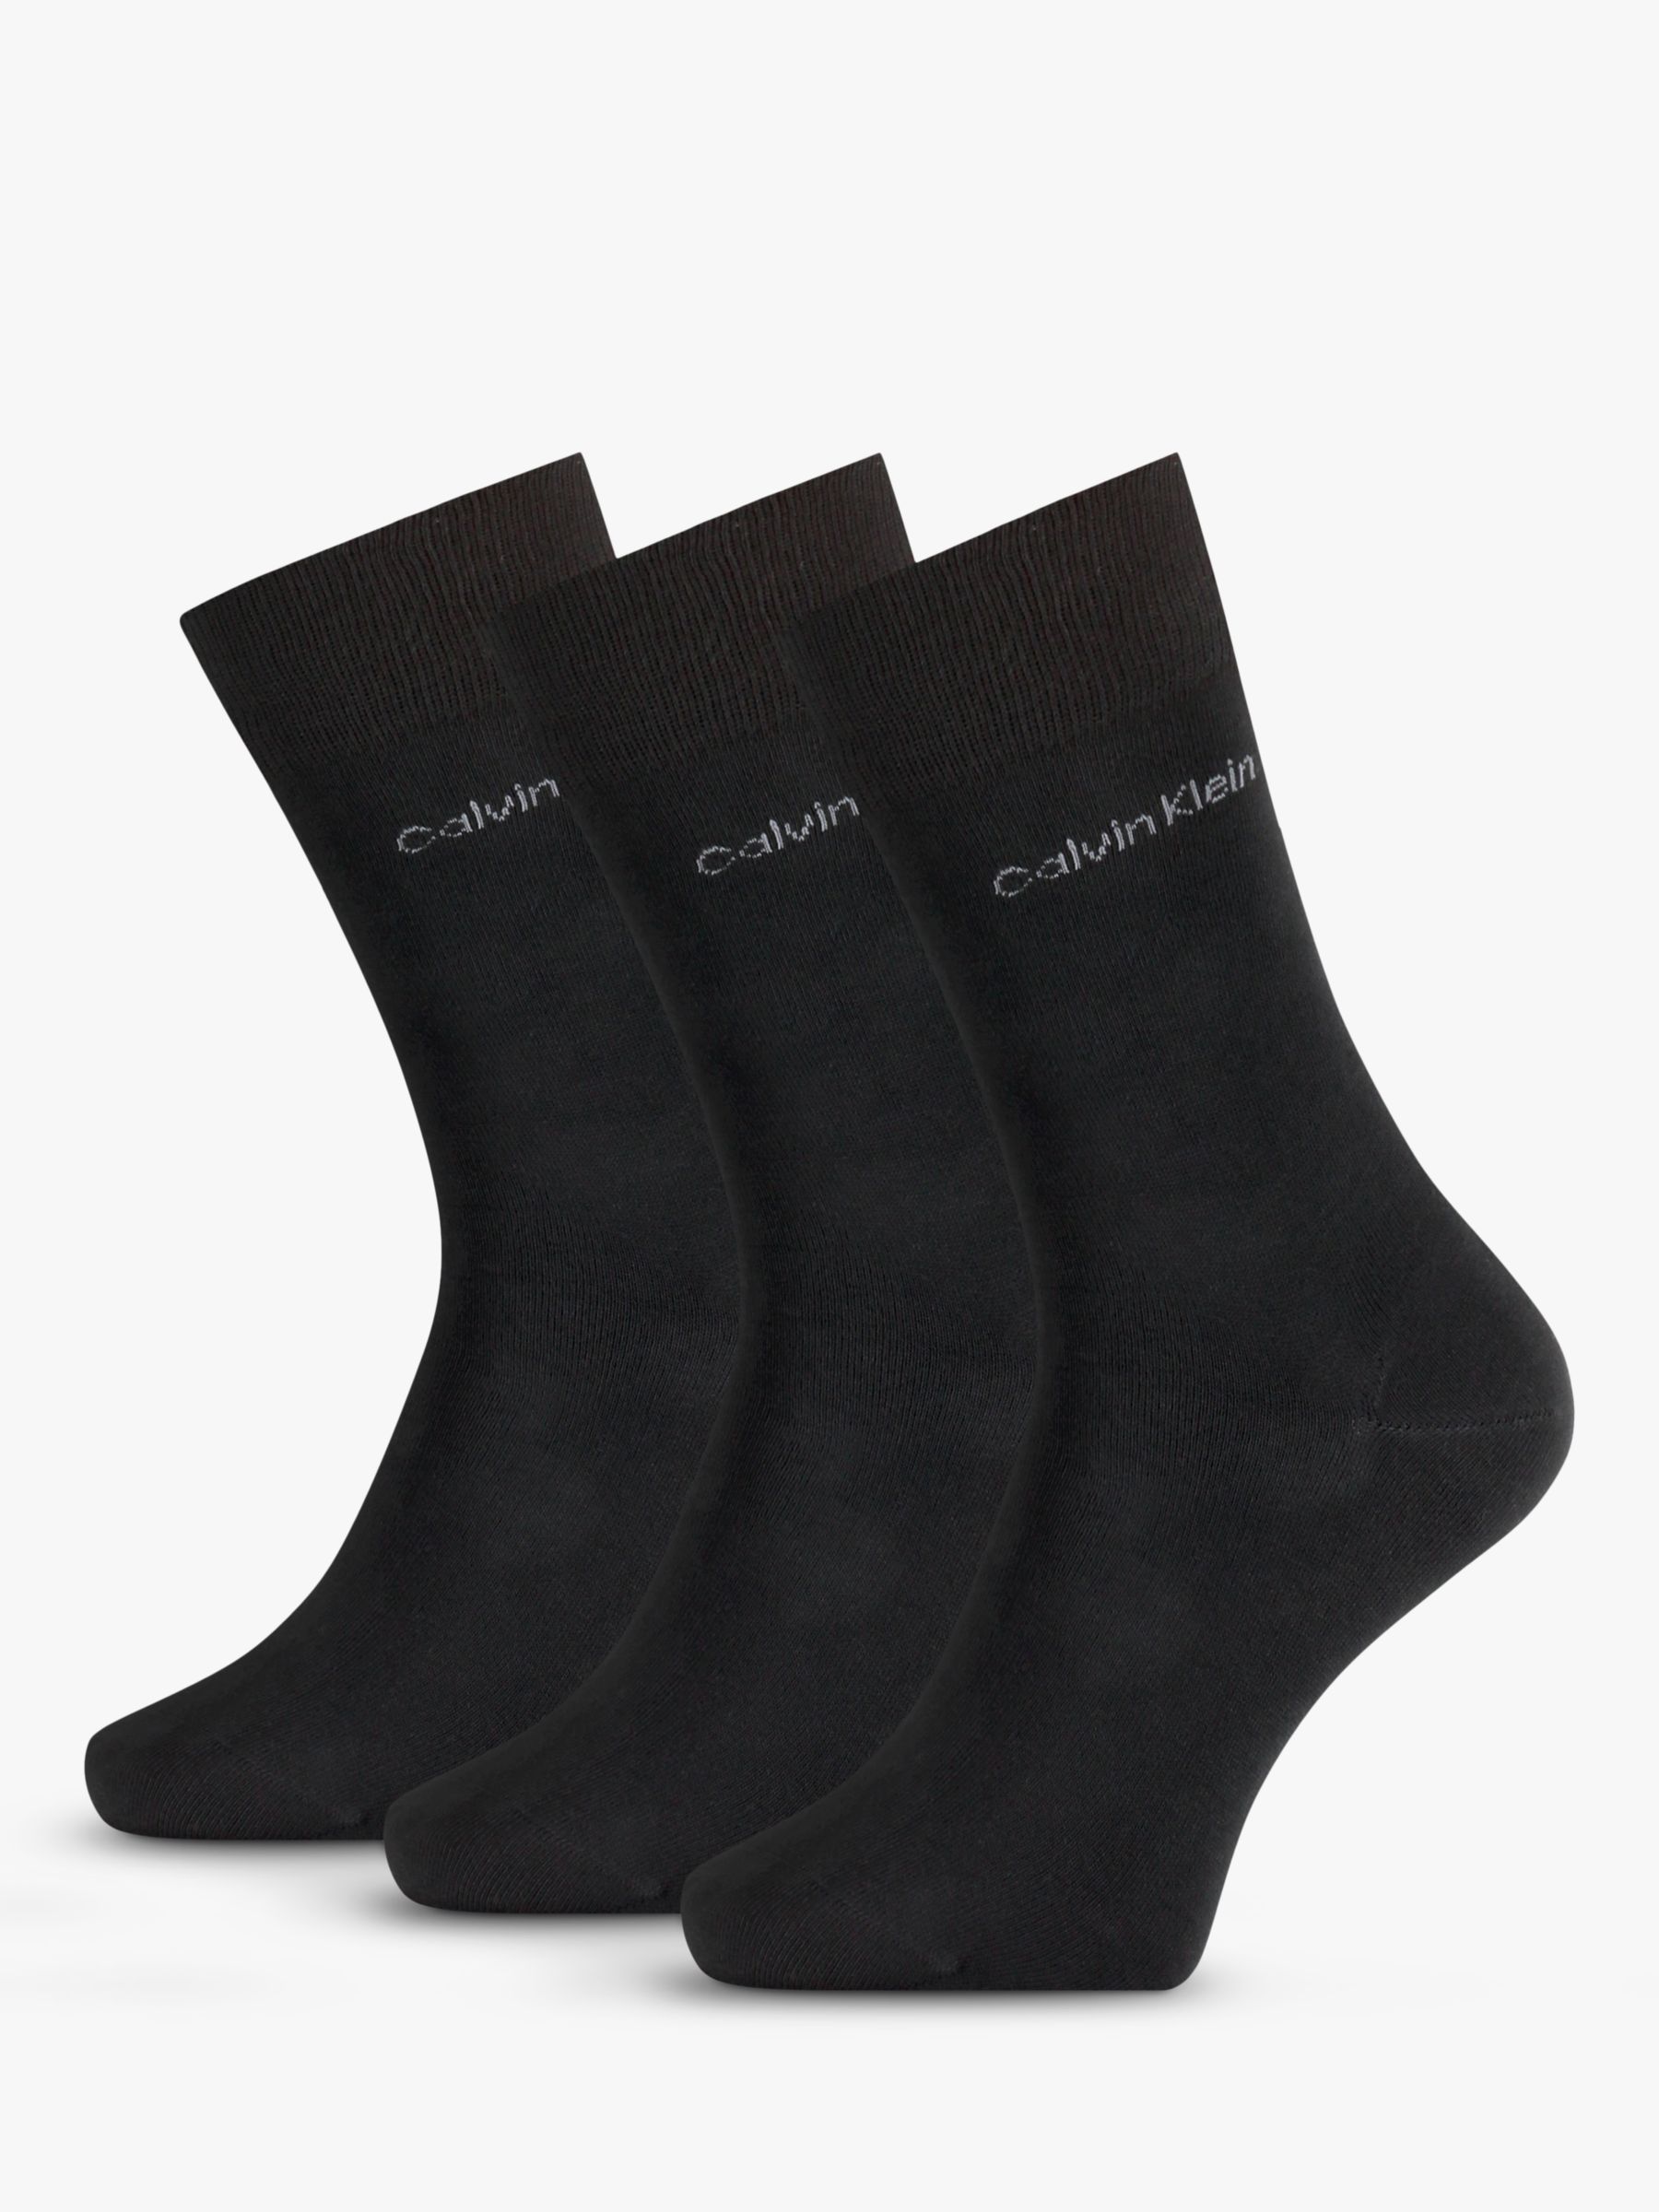 Calvin Klein Logo Socks, One Size, Pack of 3, Black at John Lewis & Partners